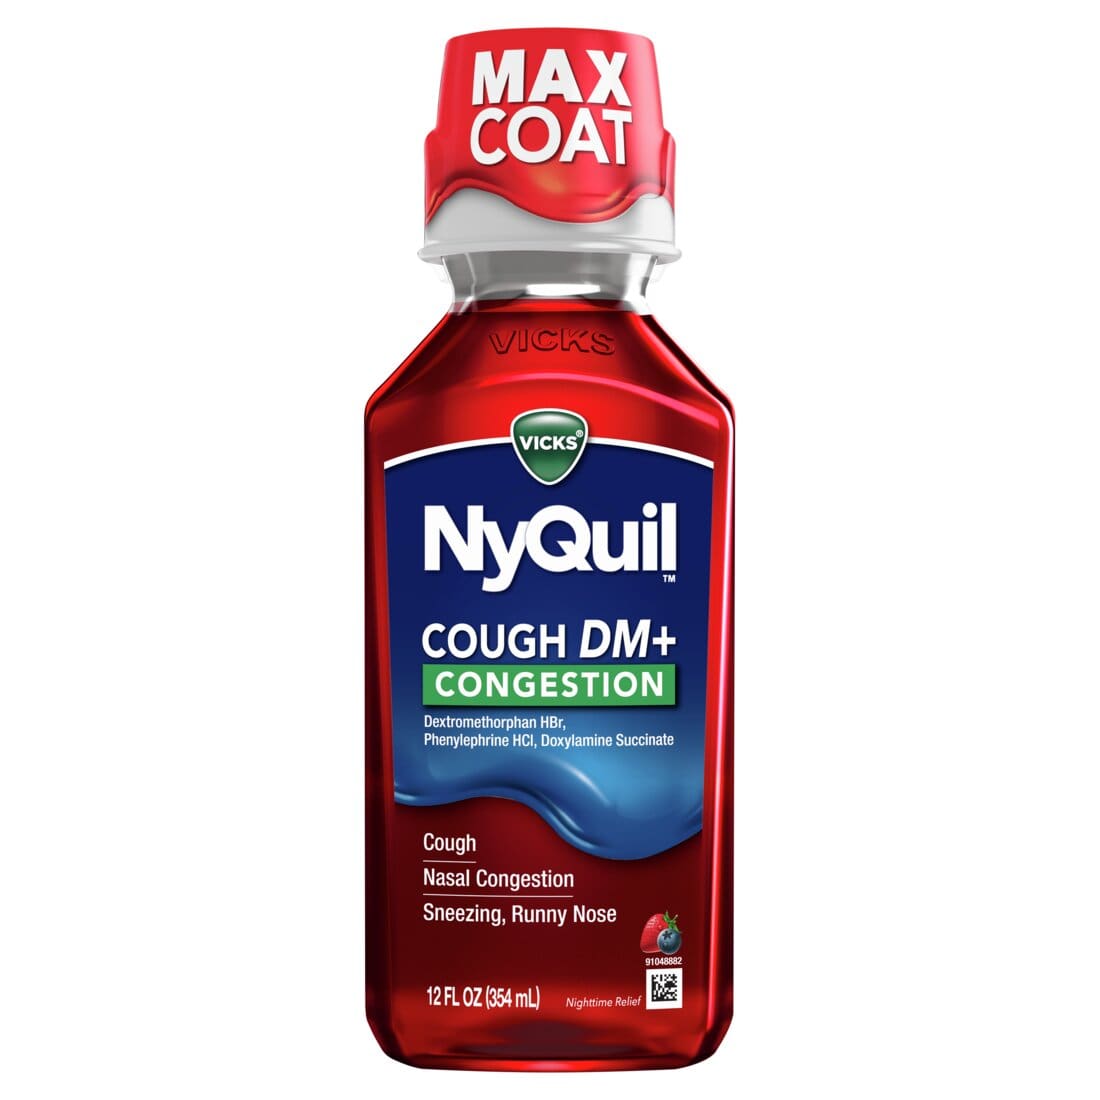 Vicks NyQuil Cough DM+ Congestion Relief Liquid Medicine Multi-Symptom Cherry Flavor - 12oz/12pk